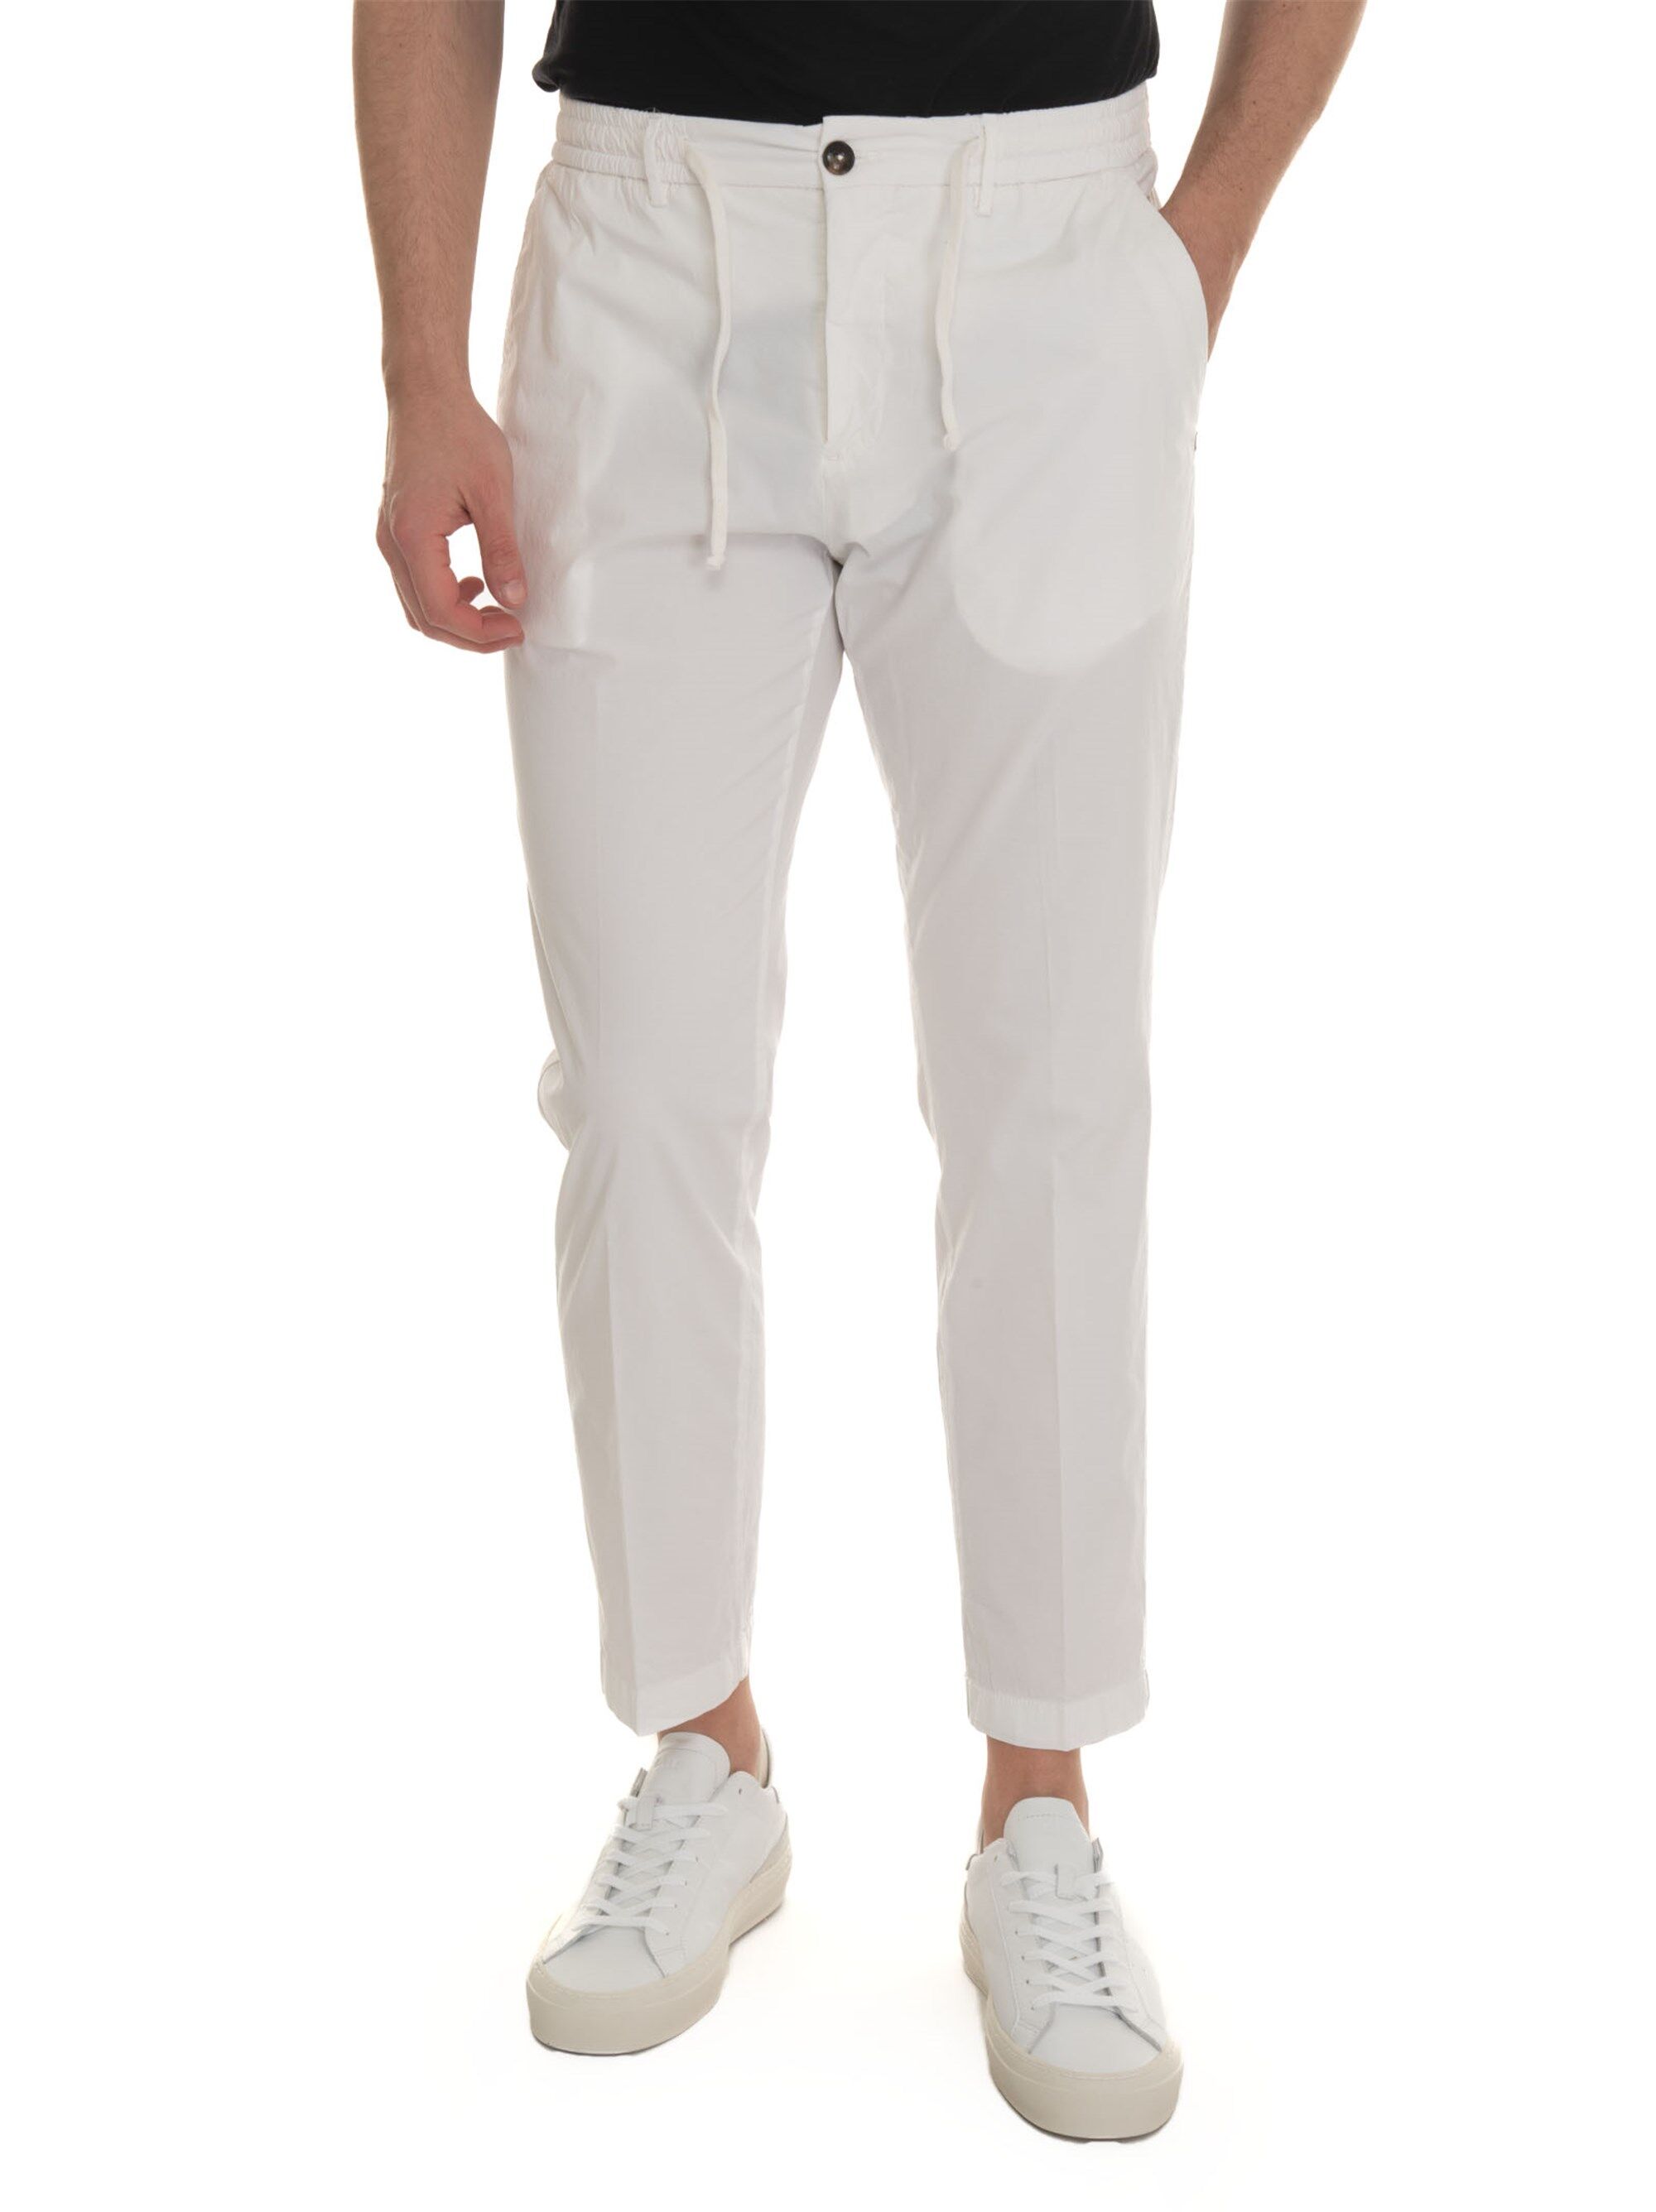 Detwelve Pantalone modello chino Bianco Uomo 52